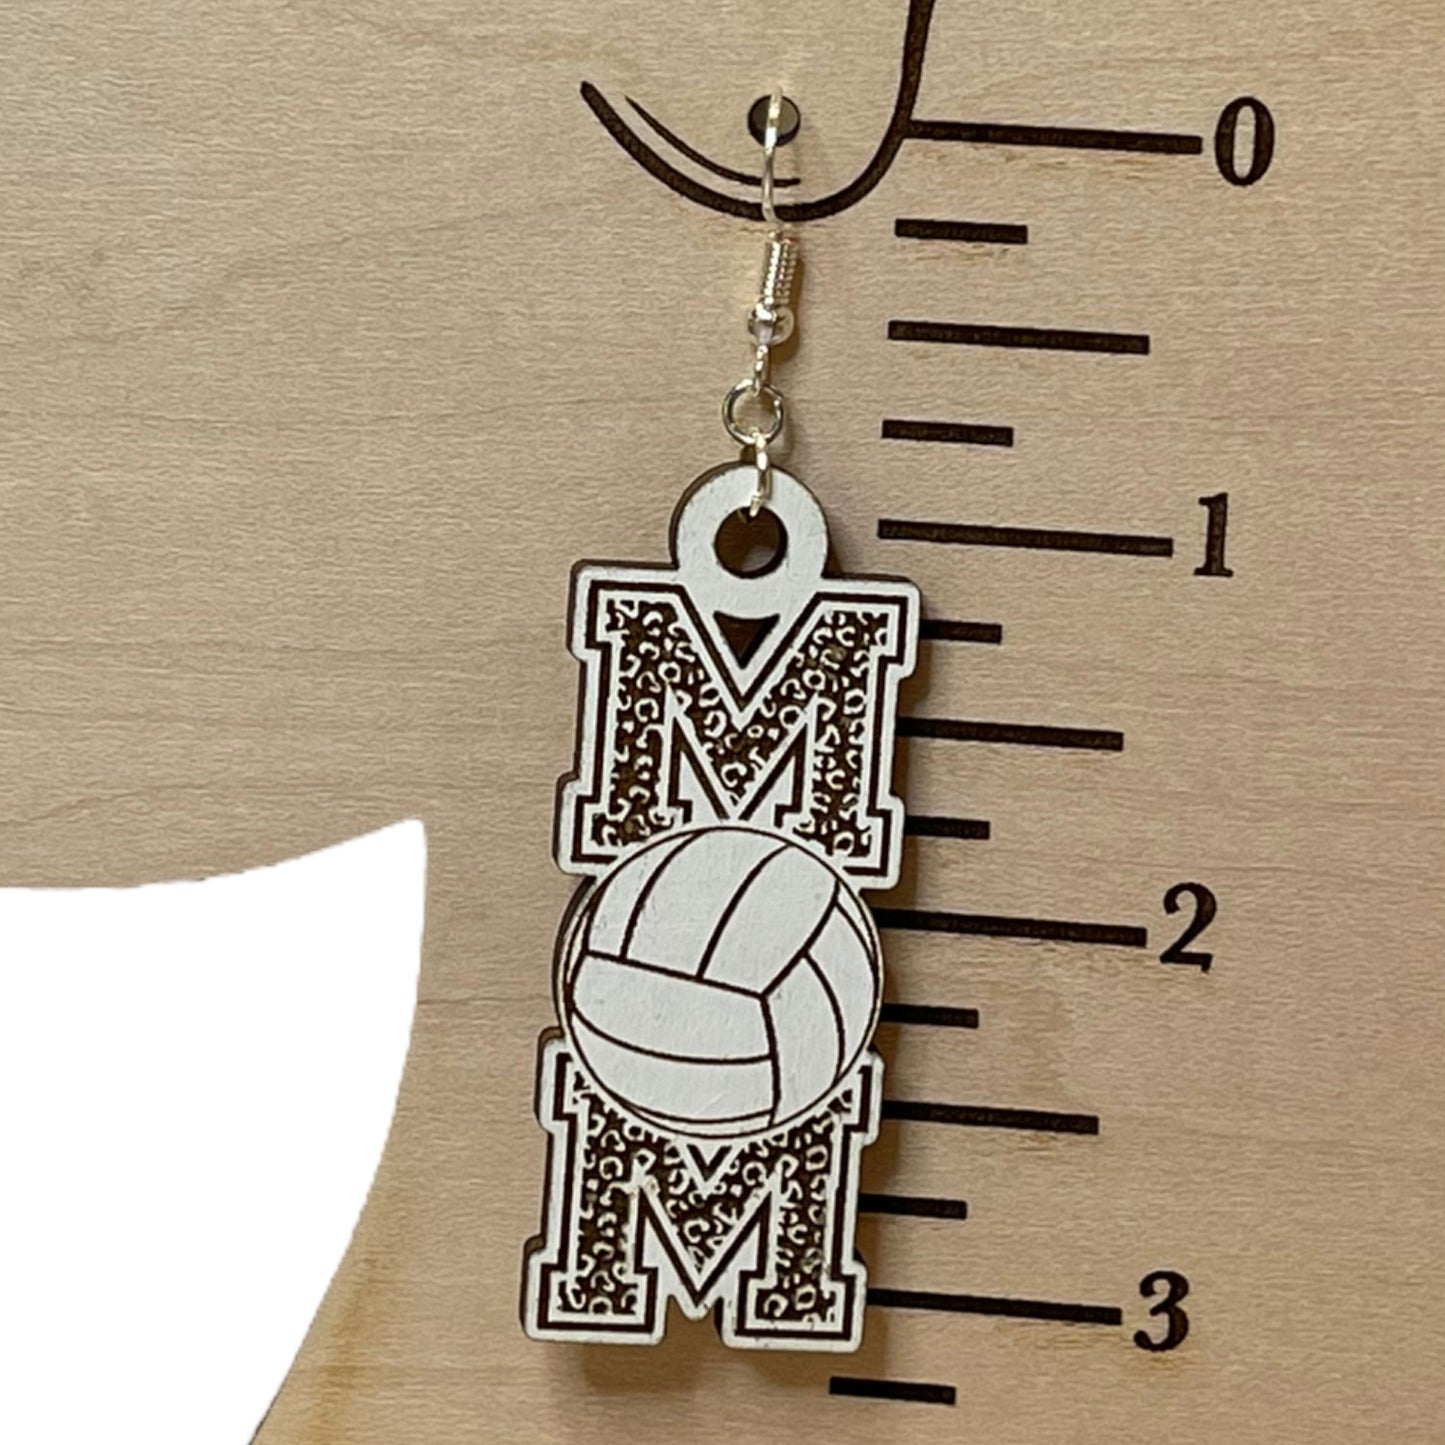 Volley Ball Mom Earrings - Sports Earrings (Set of 3)